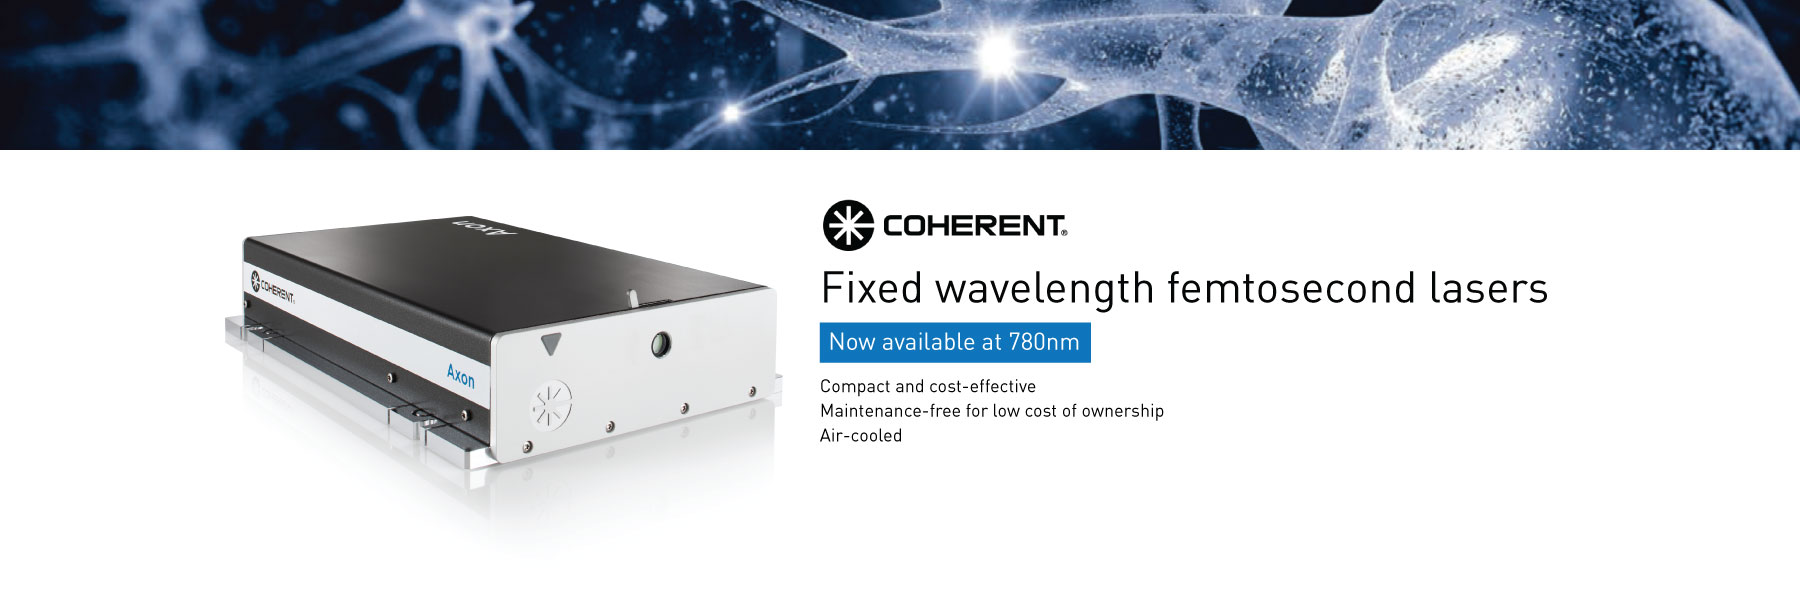 Fixed wavelength femtosecond lasers